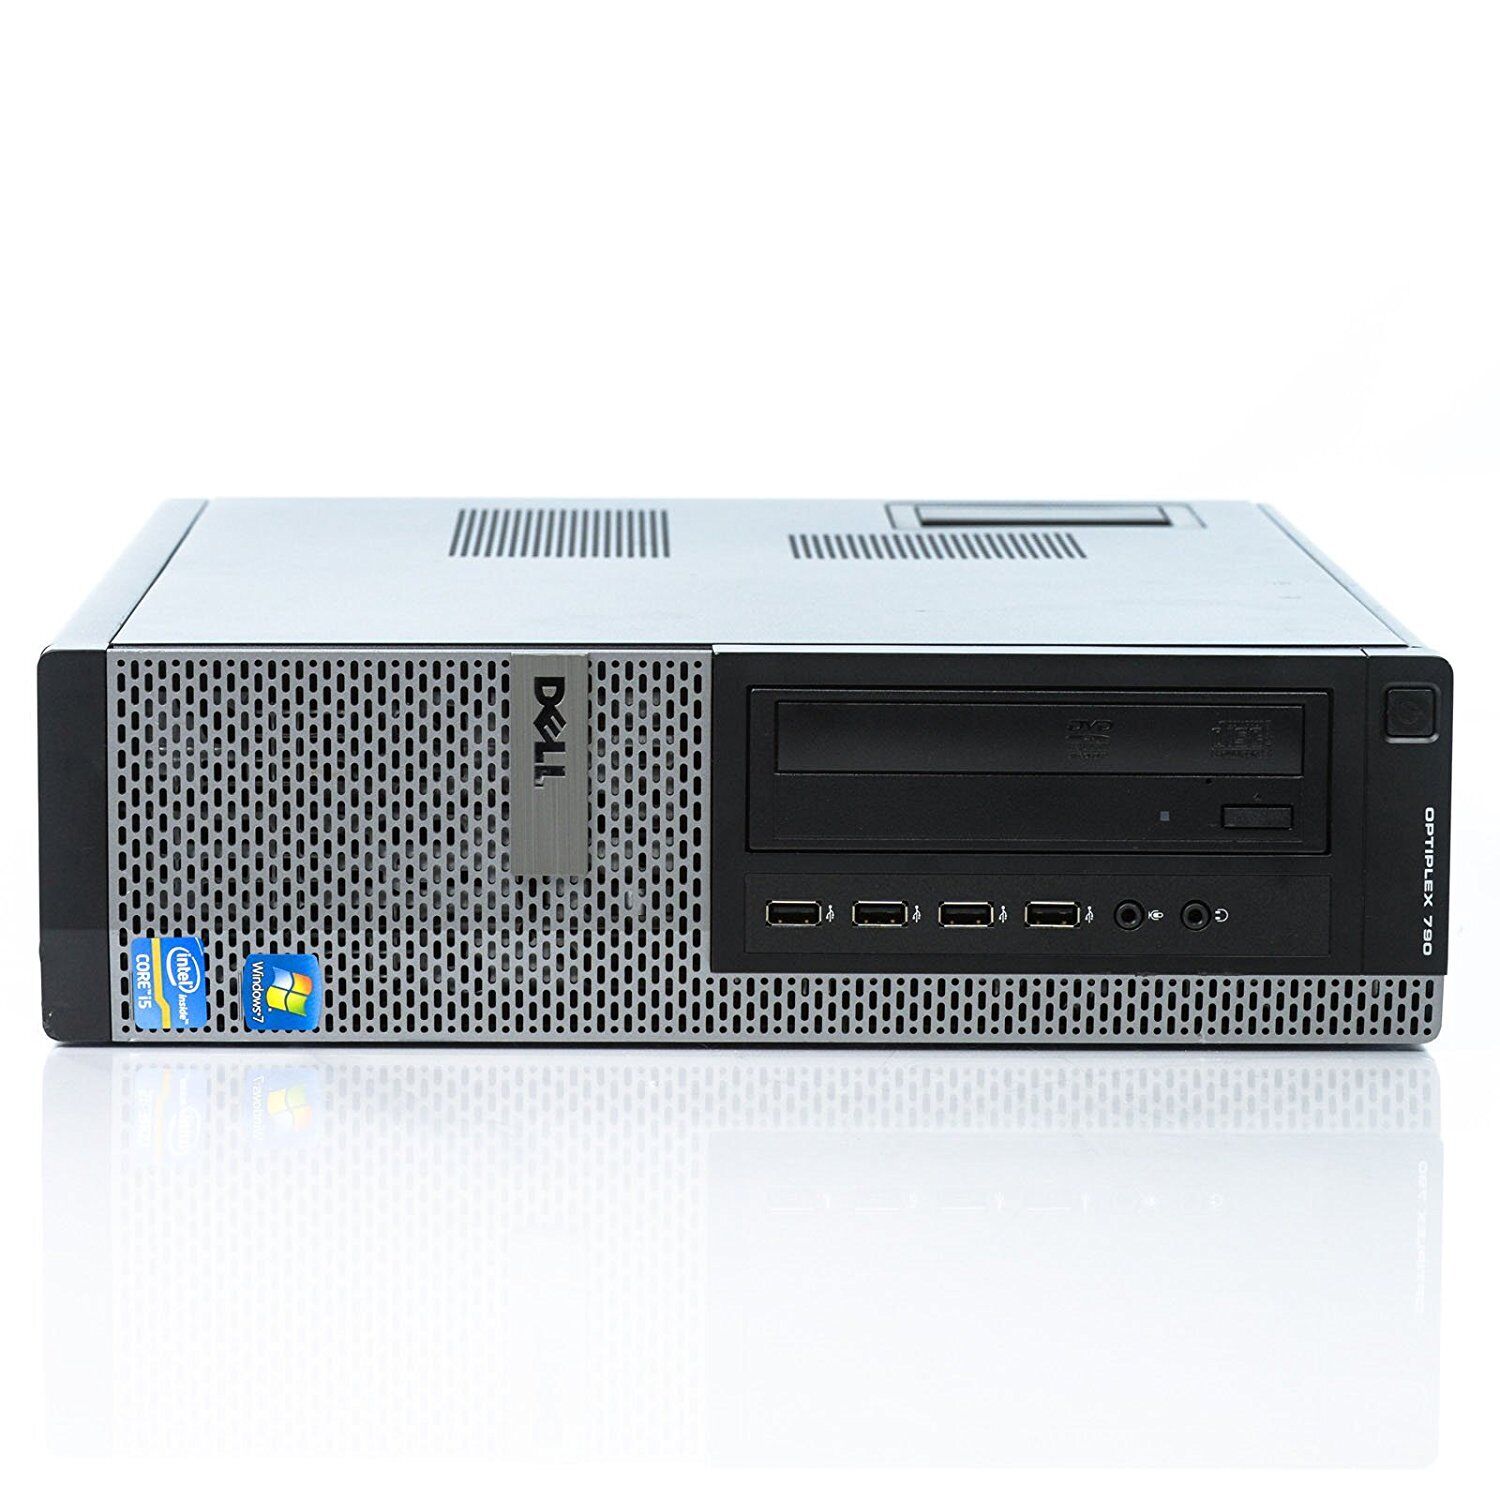 Customize Dell Optiplex 790 Desktop Computer with Windows 10 x32bit